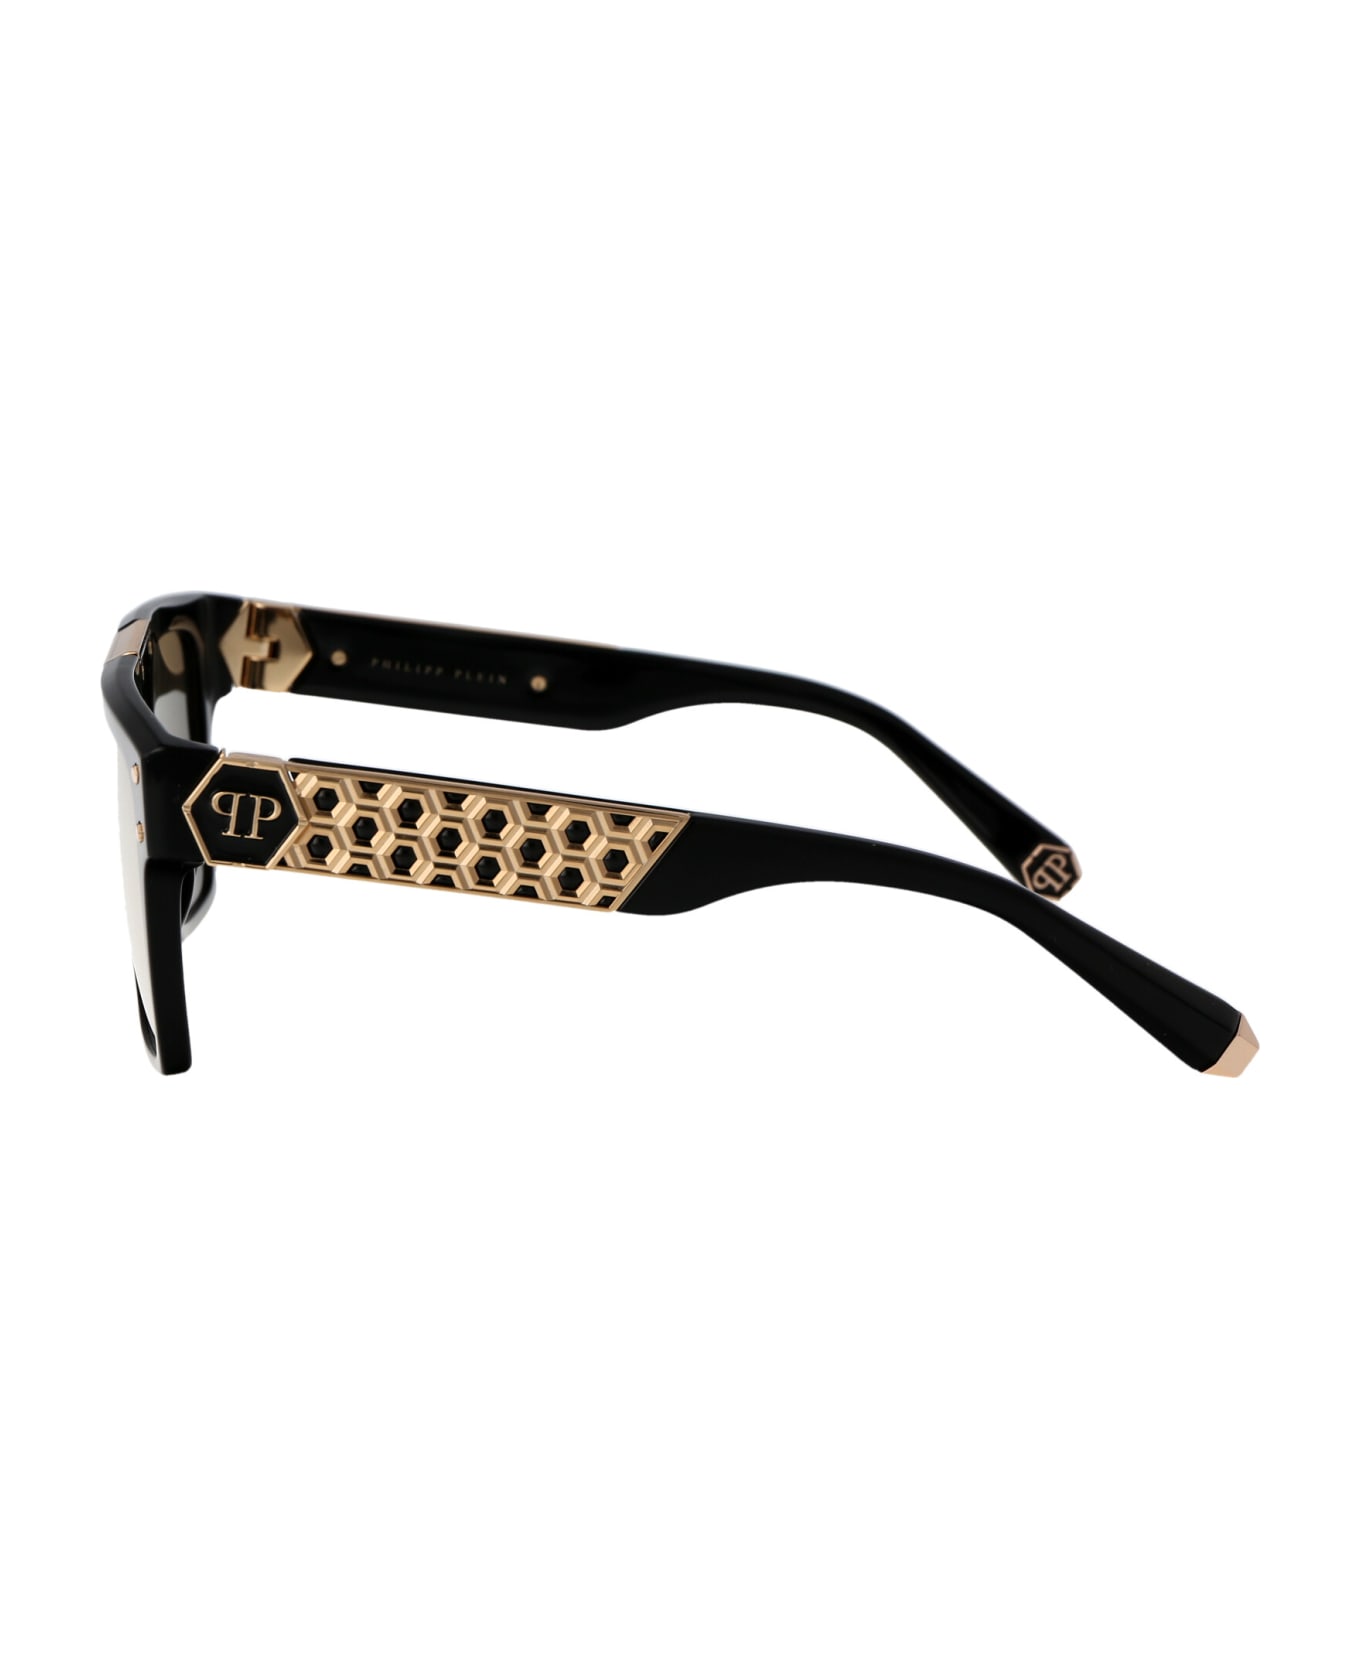 Philipp Plein Spp080 Sunglasses - 700G BLACK